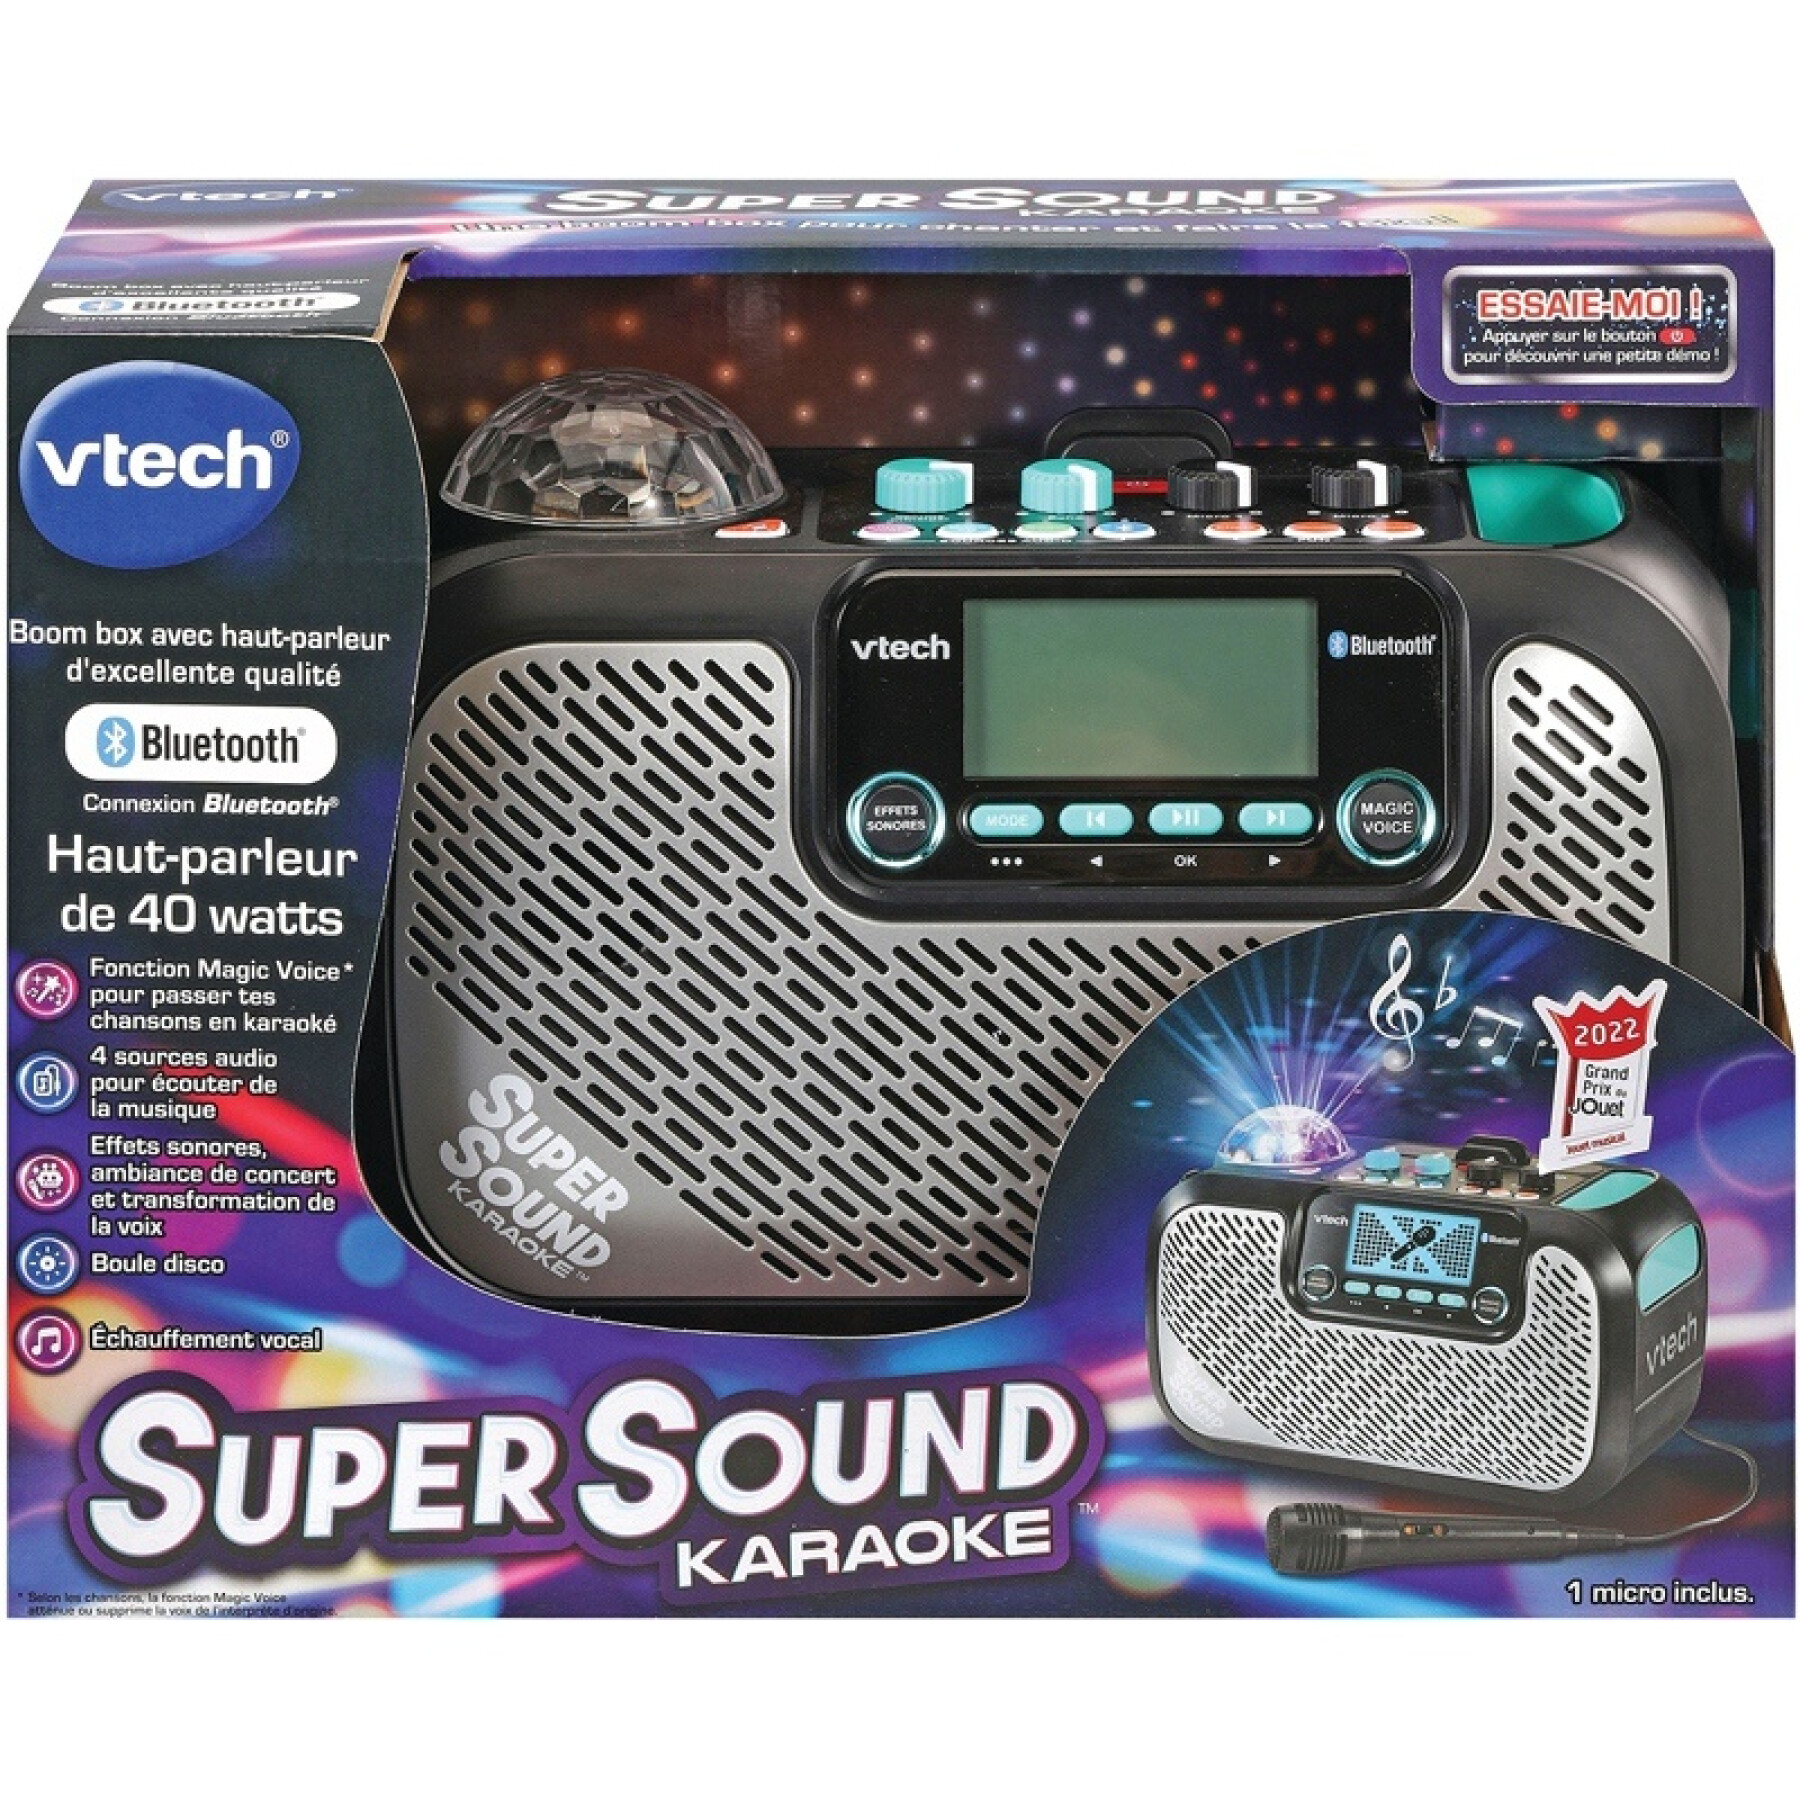 Music kit Vtech Electronics Europe Supersound Karaoke